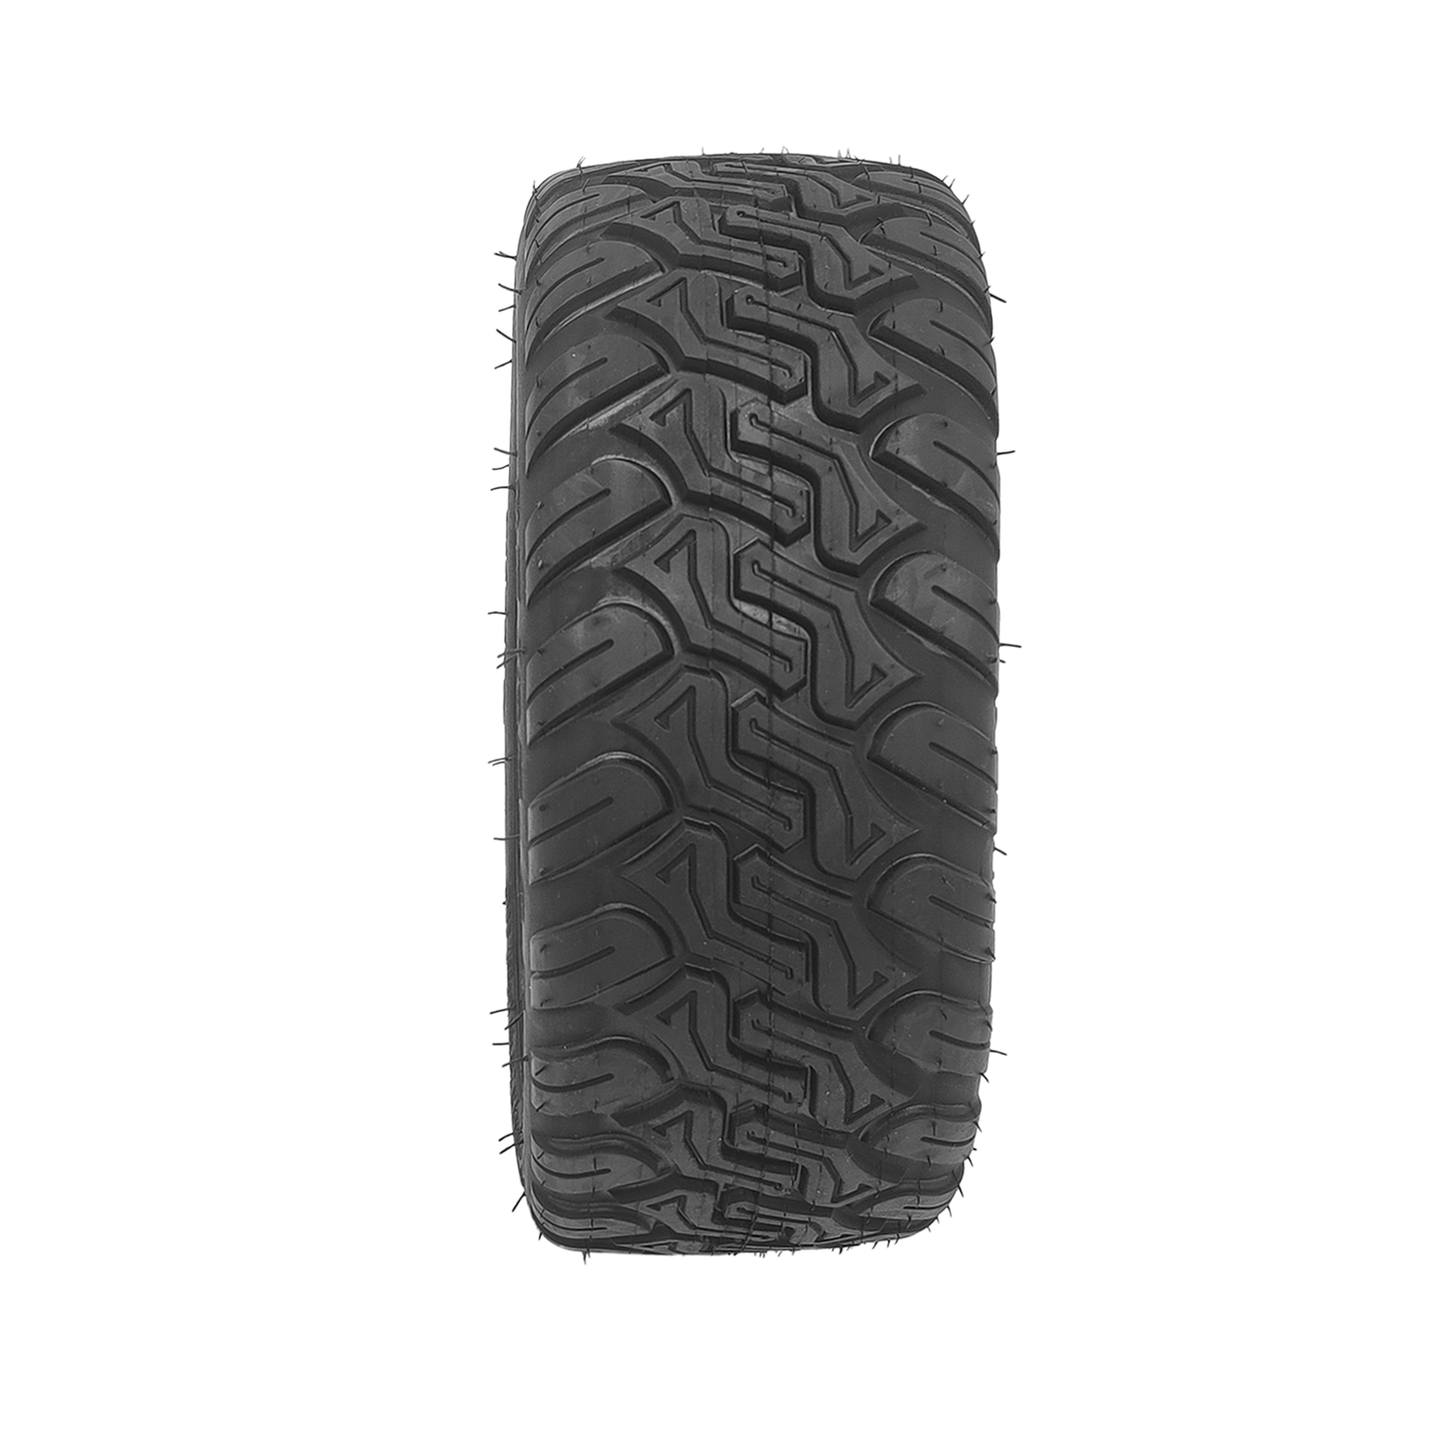 Innova 85/65-6.5 tires off-road tubeless